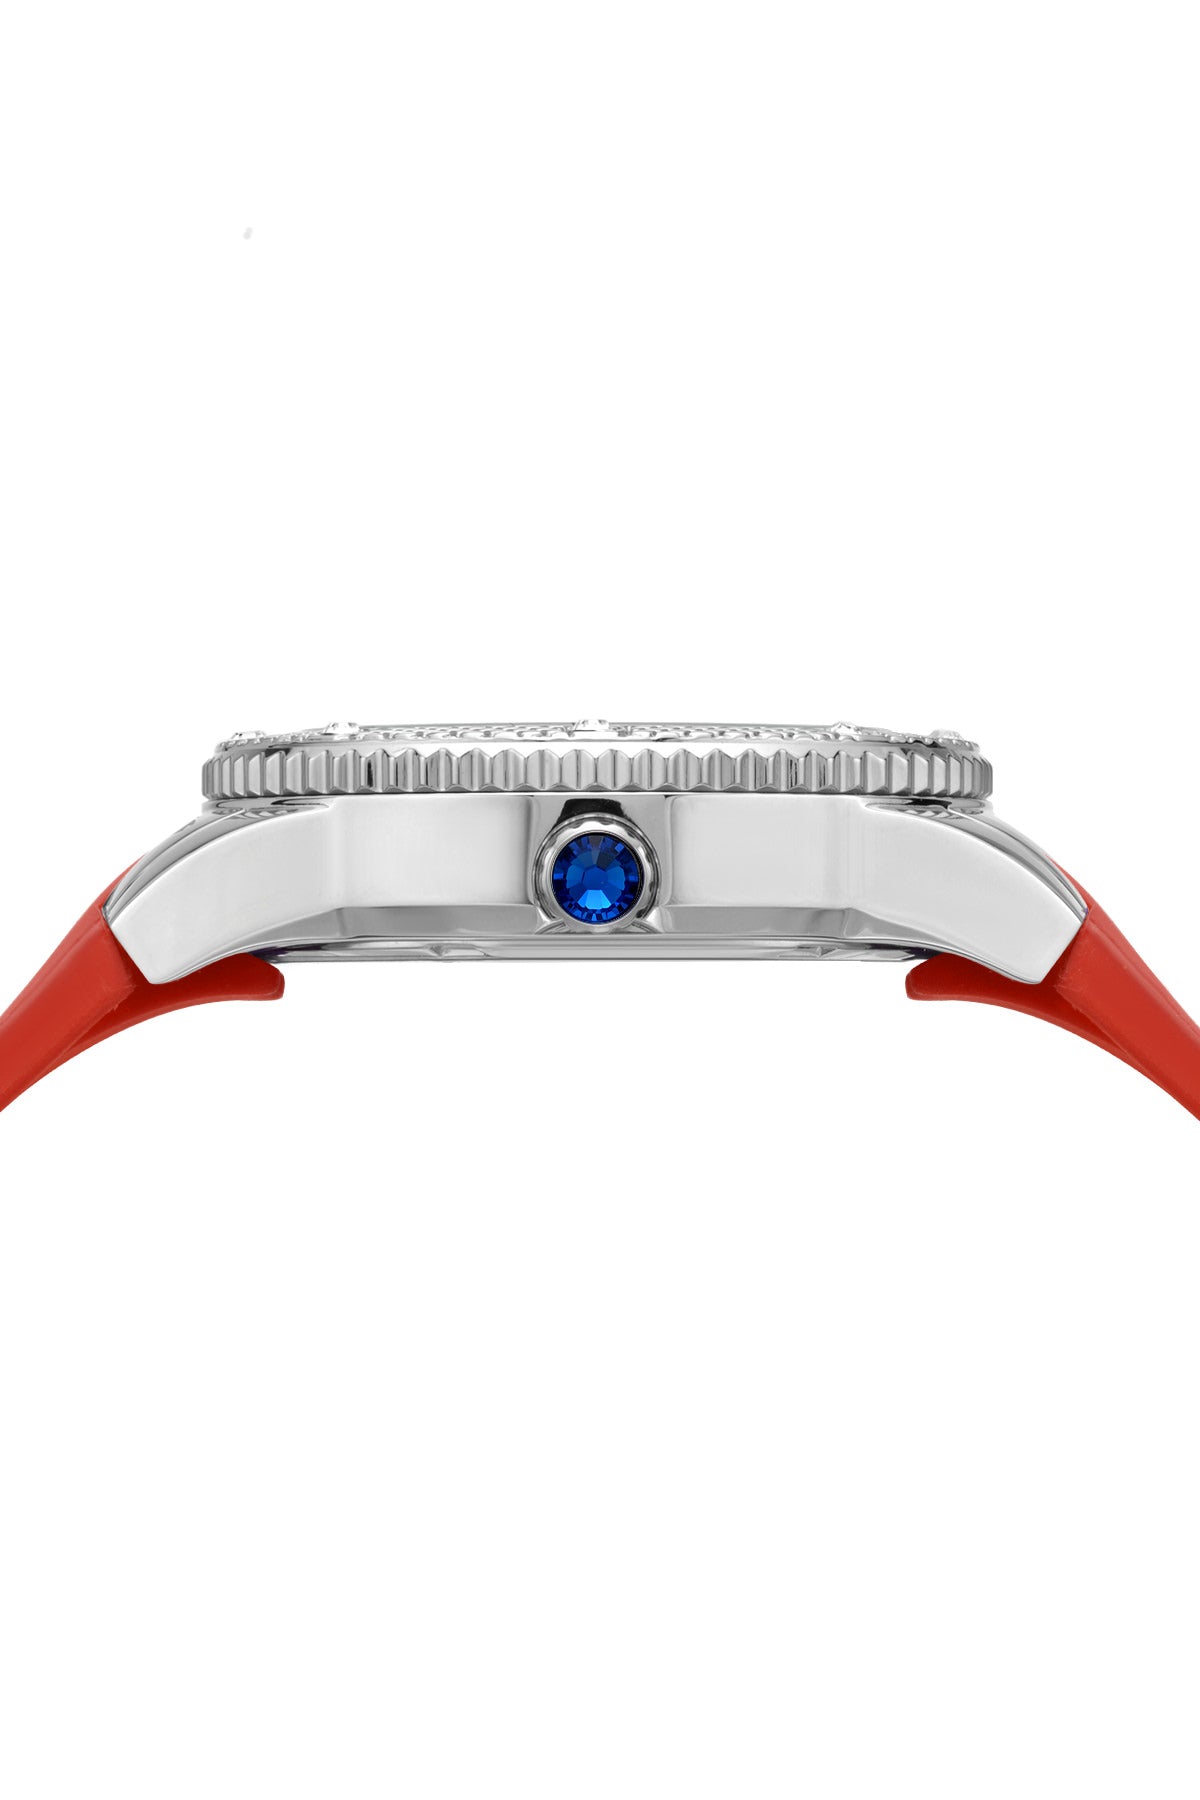 Porsamo Bleu Linda luxury women's watch, silicone strap, silver, red 493ALIR